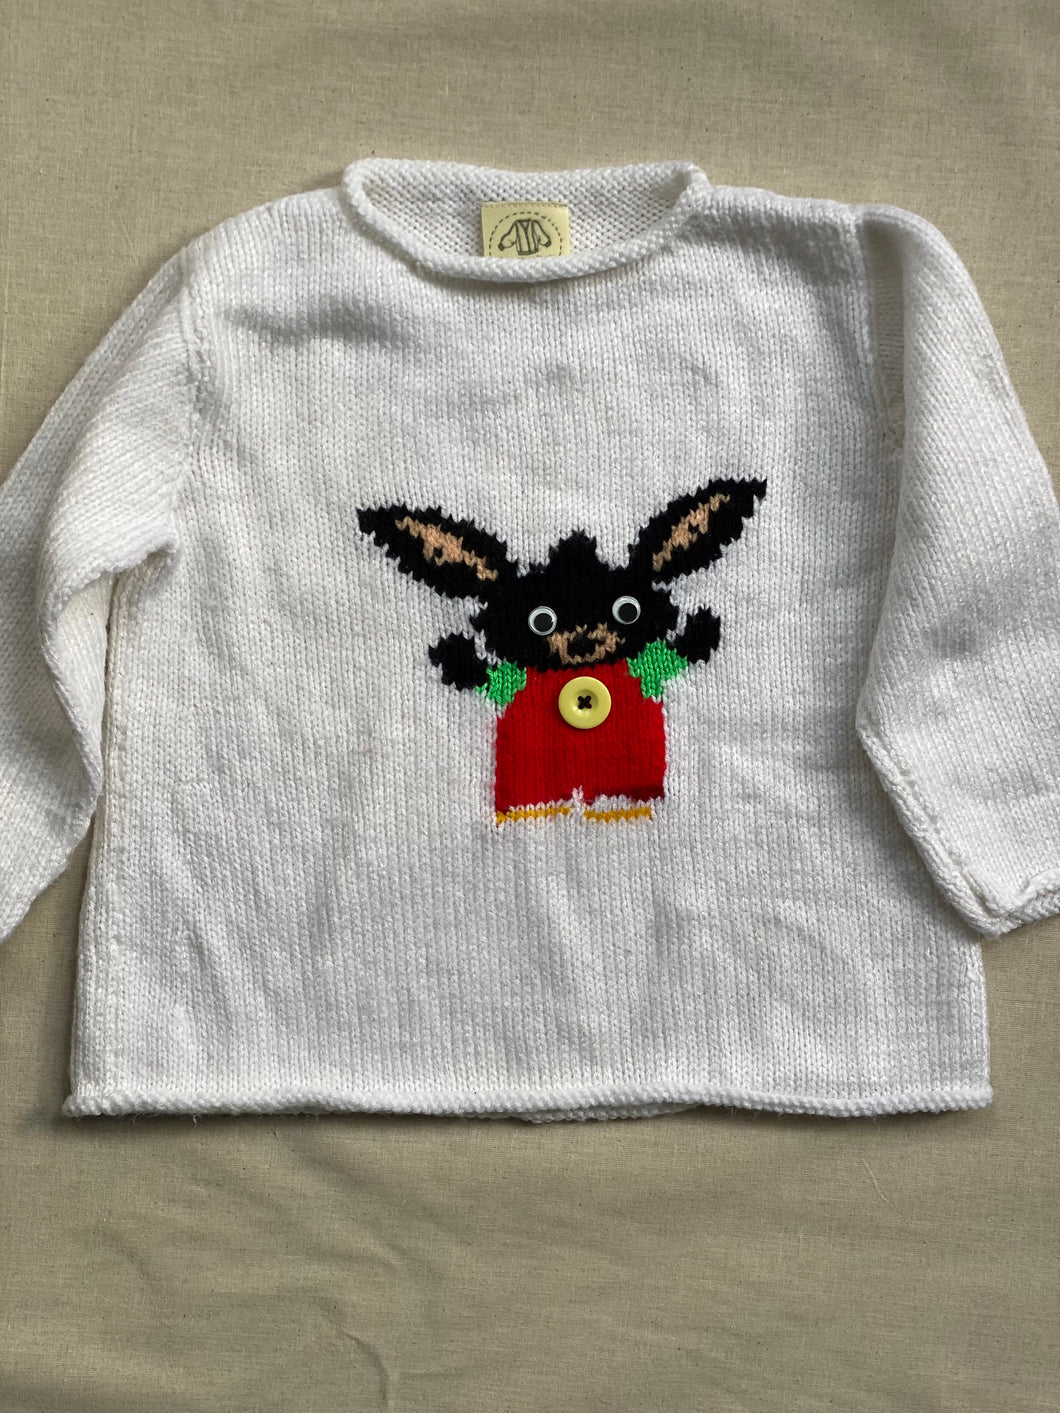 3-4 years - Bing Bunny jumper